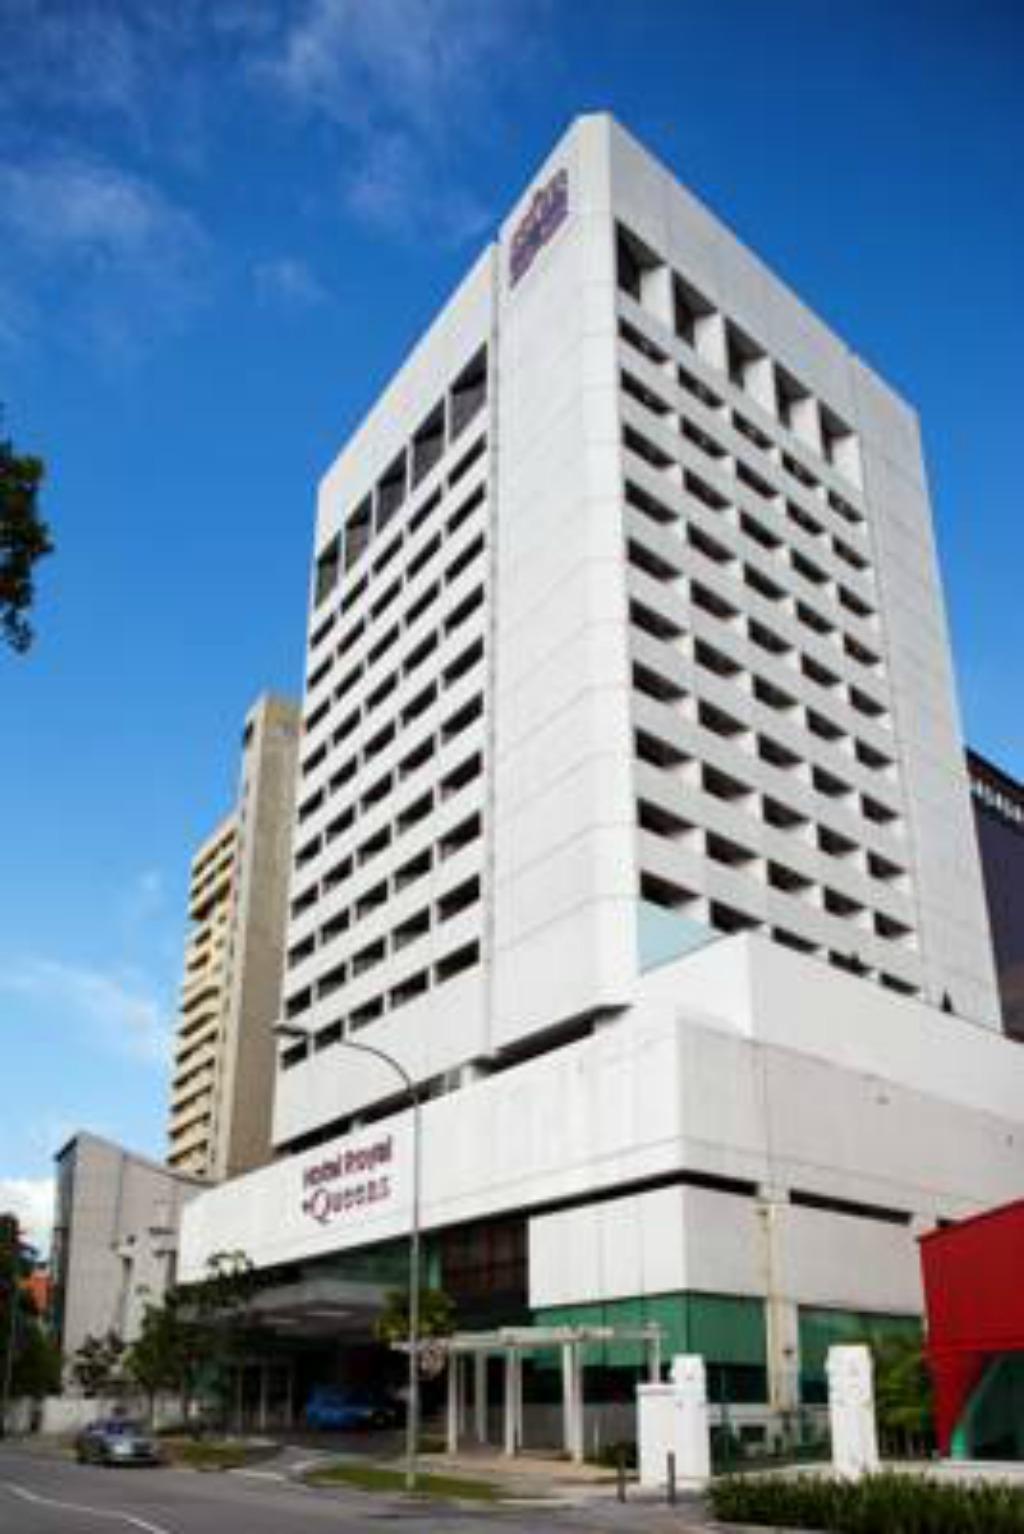 Hotel Royal At Queens Singapur Exterior foto